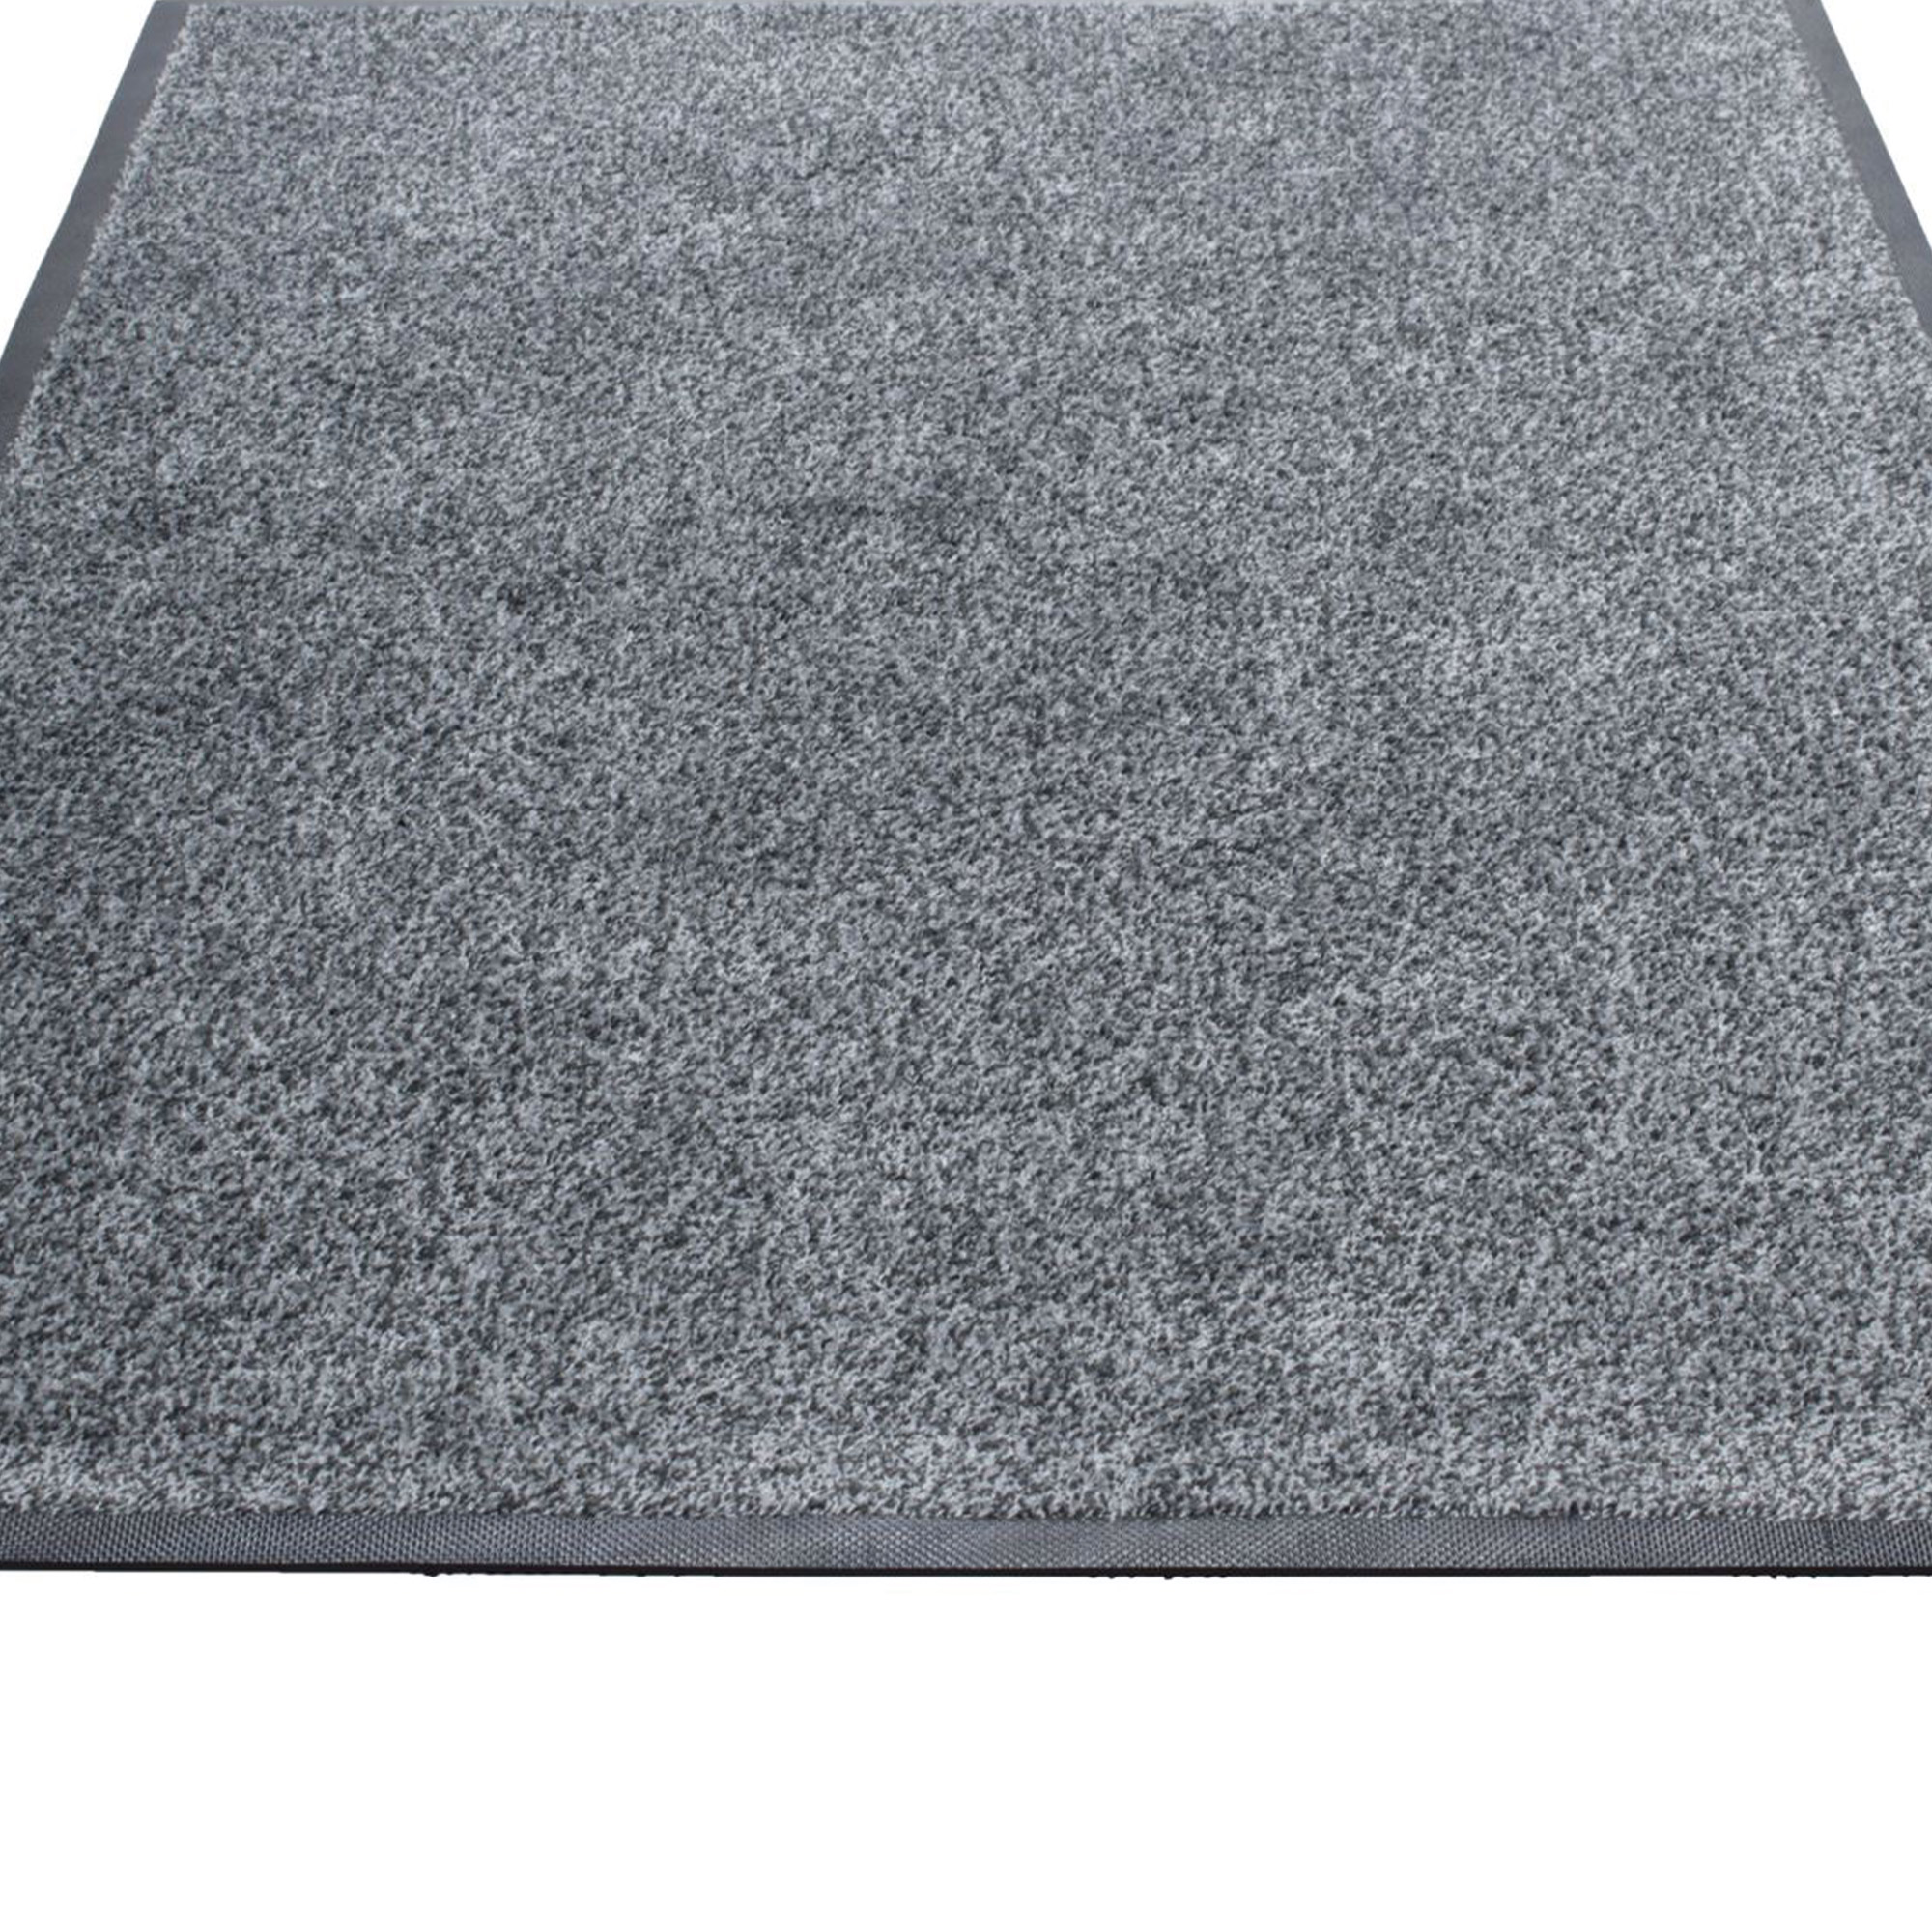 Buy MaxPlush Heavy Duty Carpet Mat Online